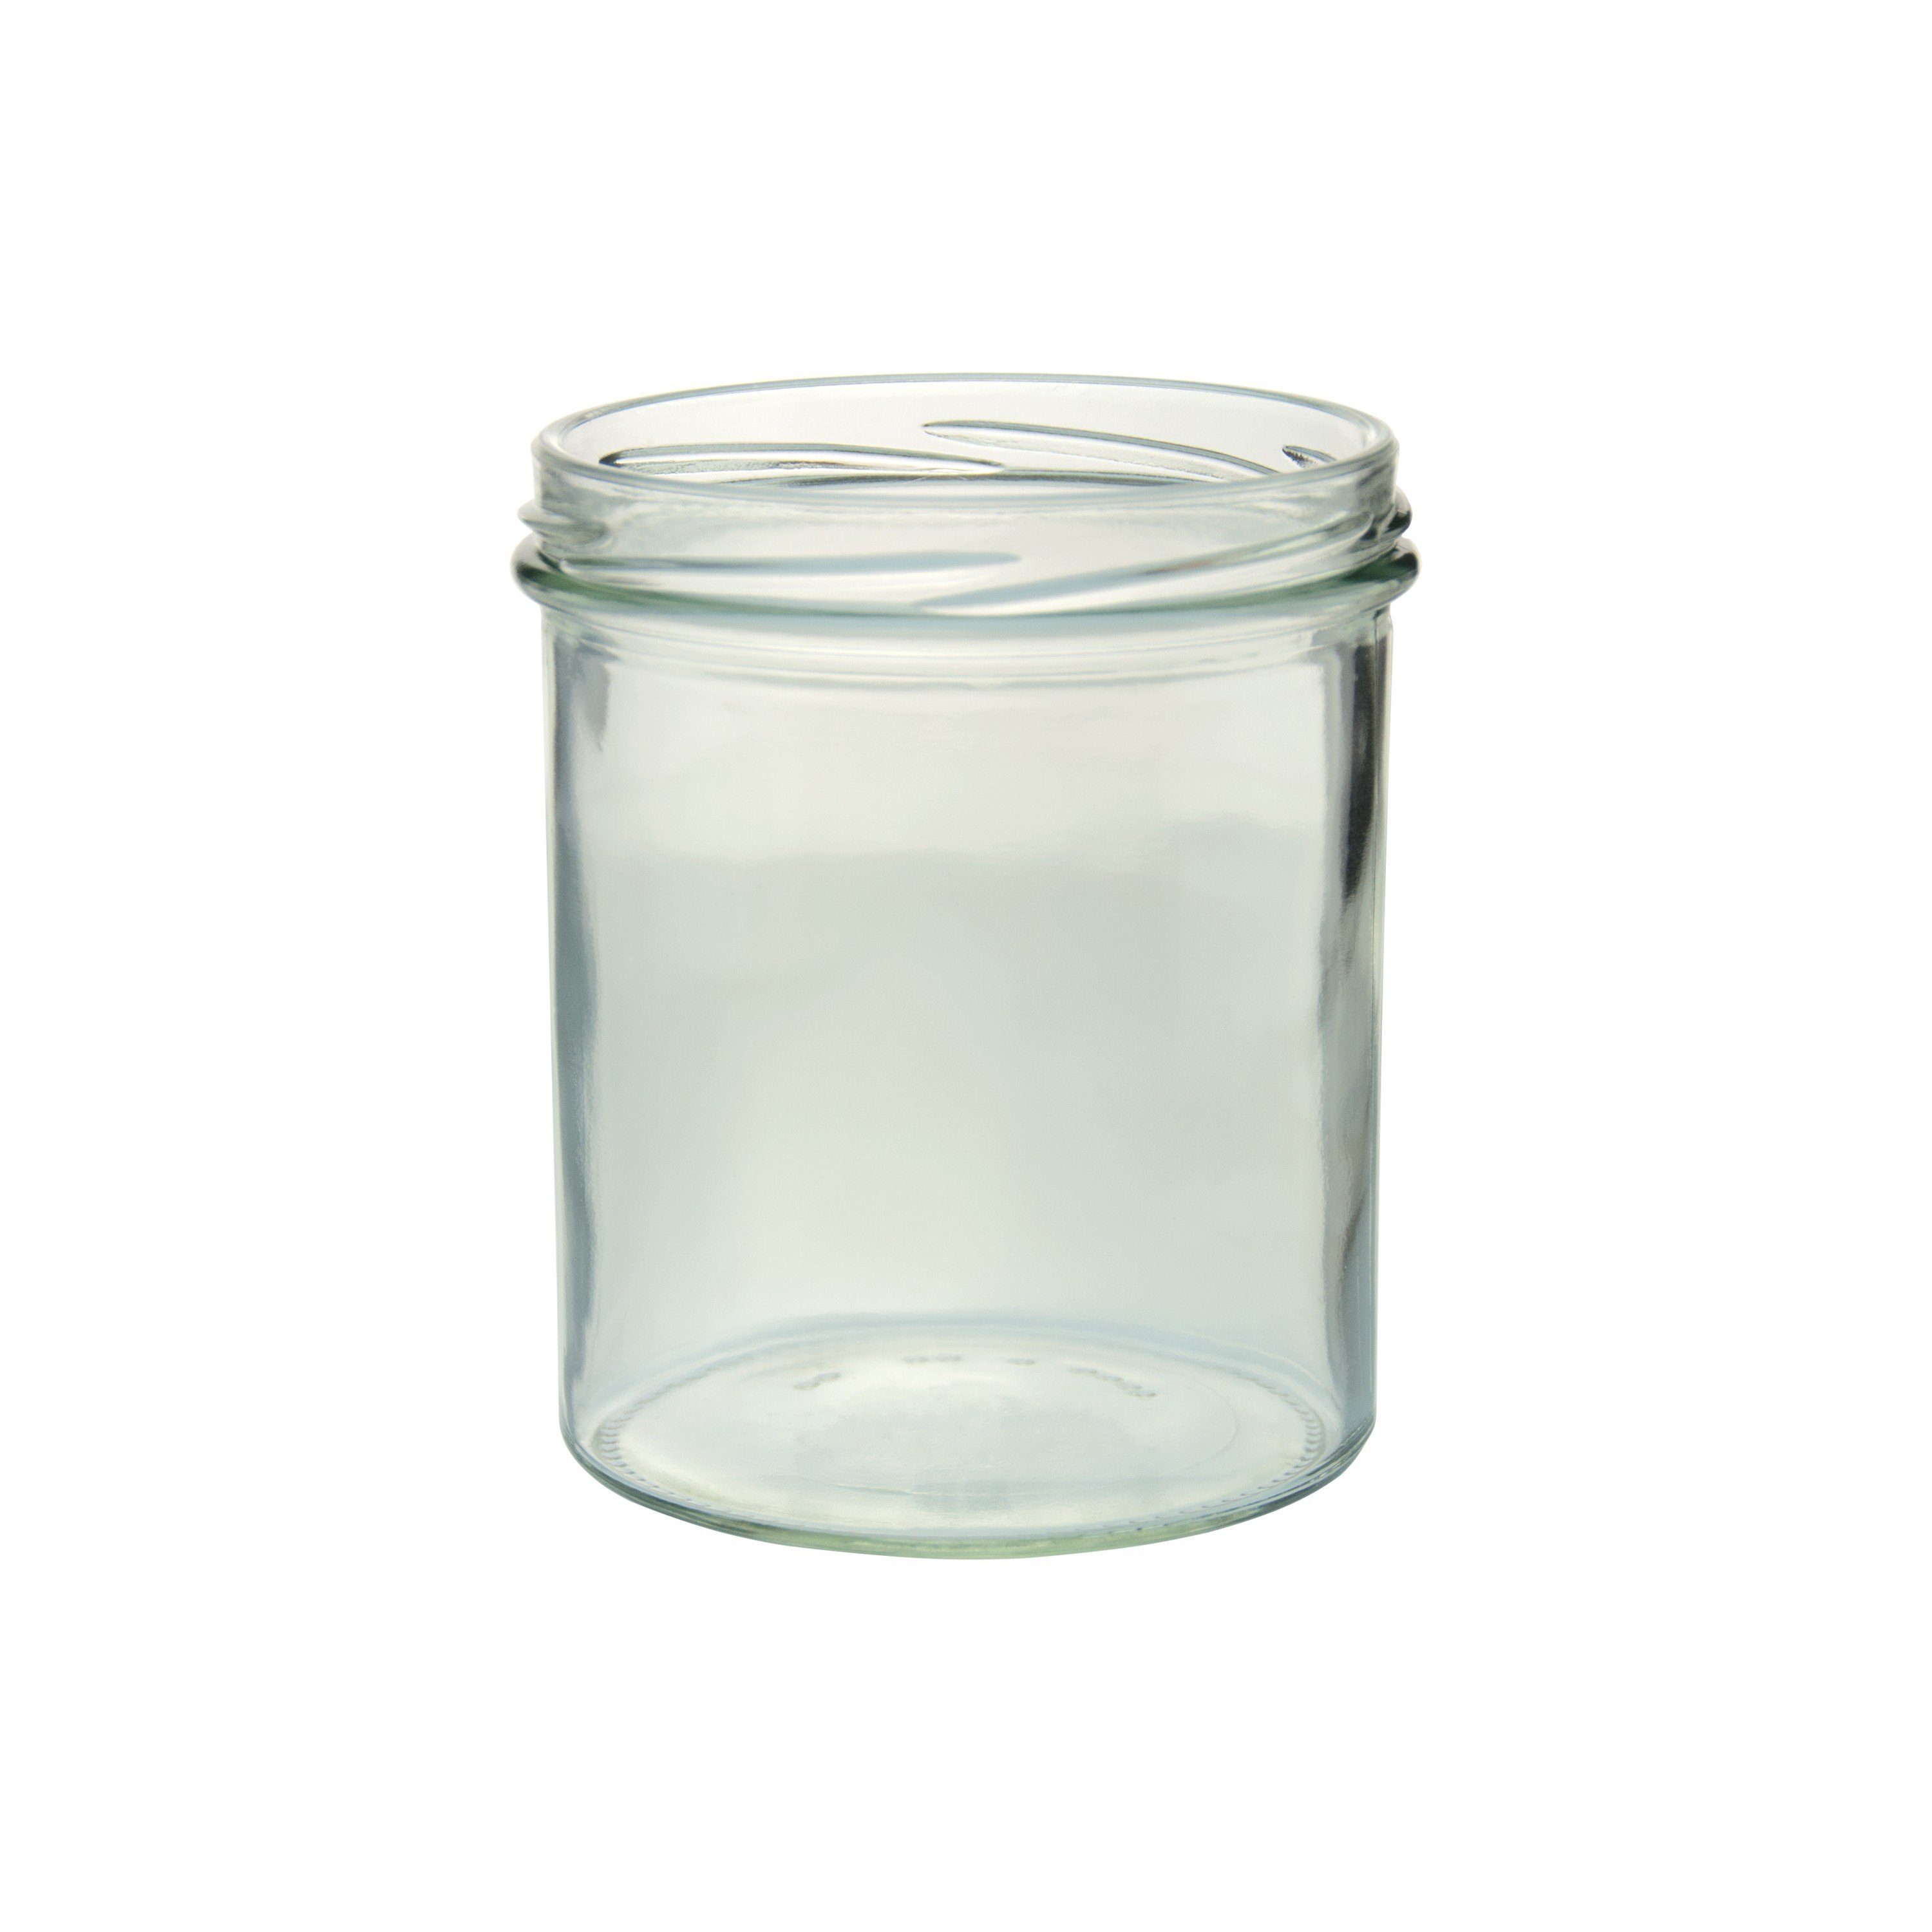 Set 350 Sturzglas To 24er ml MamboCat Glas 82 silberner Deckel, Marmeladenglas Einmachglas